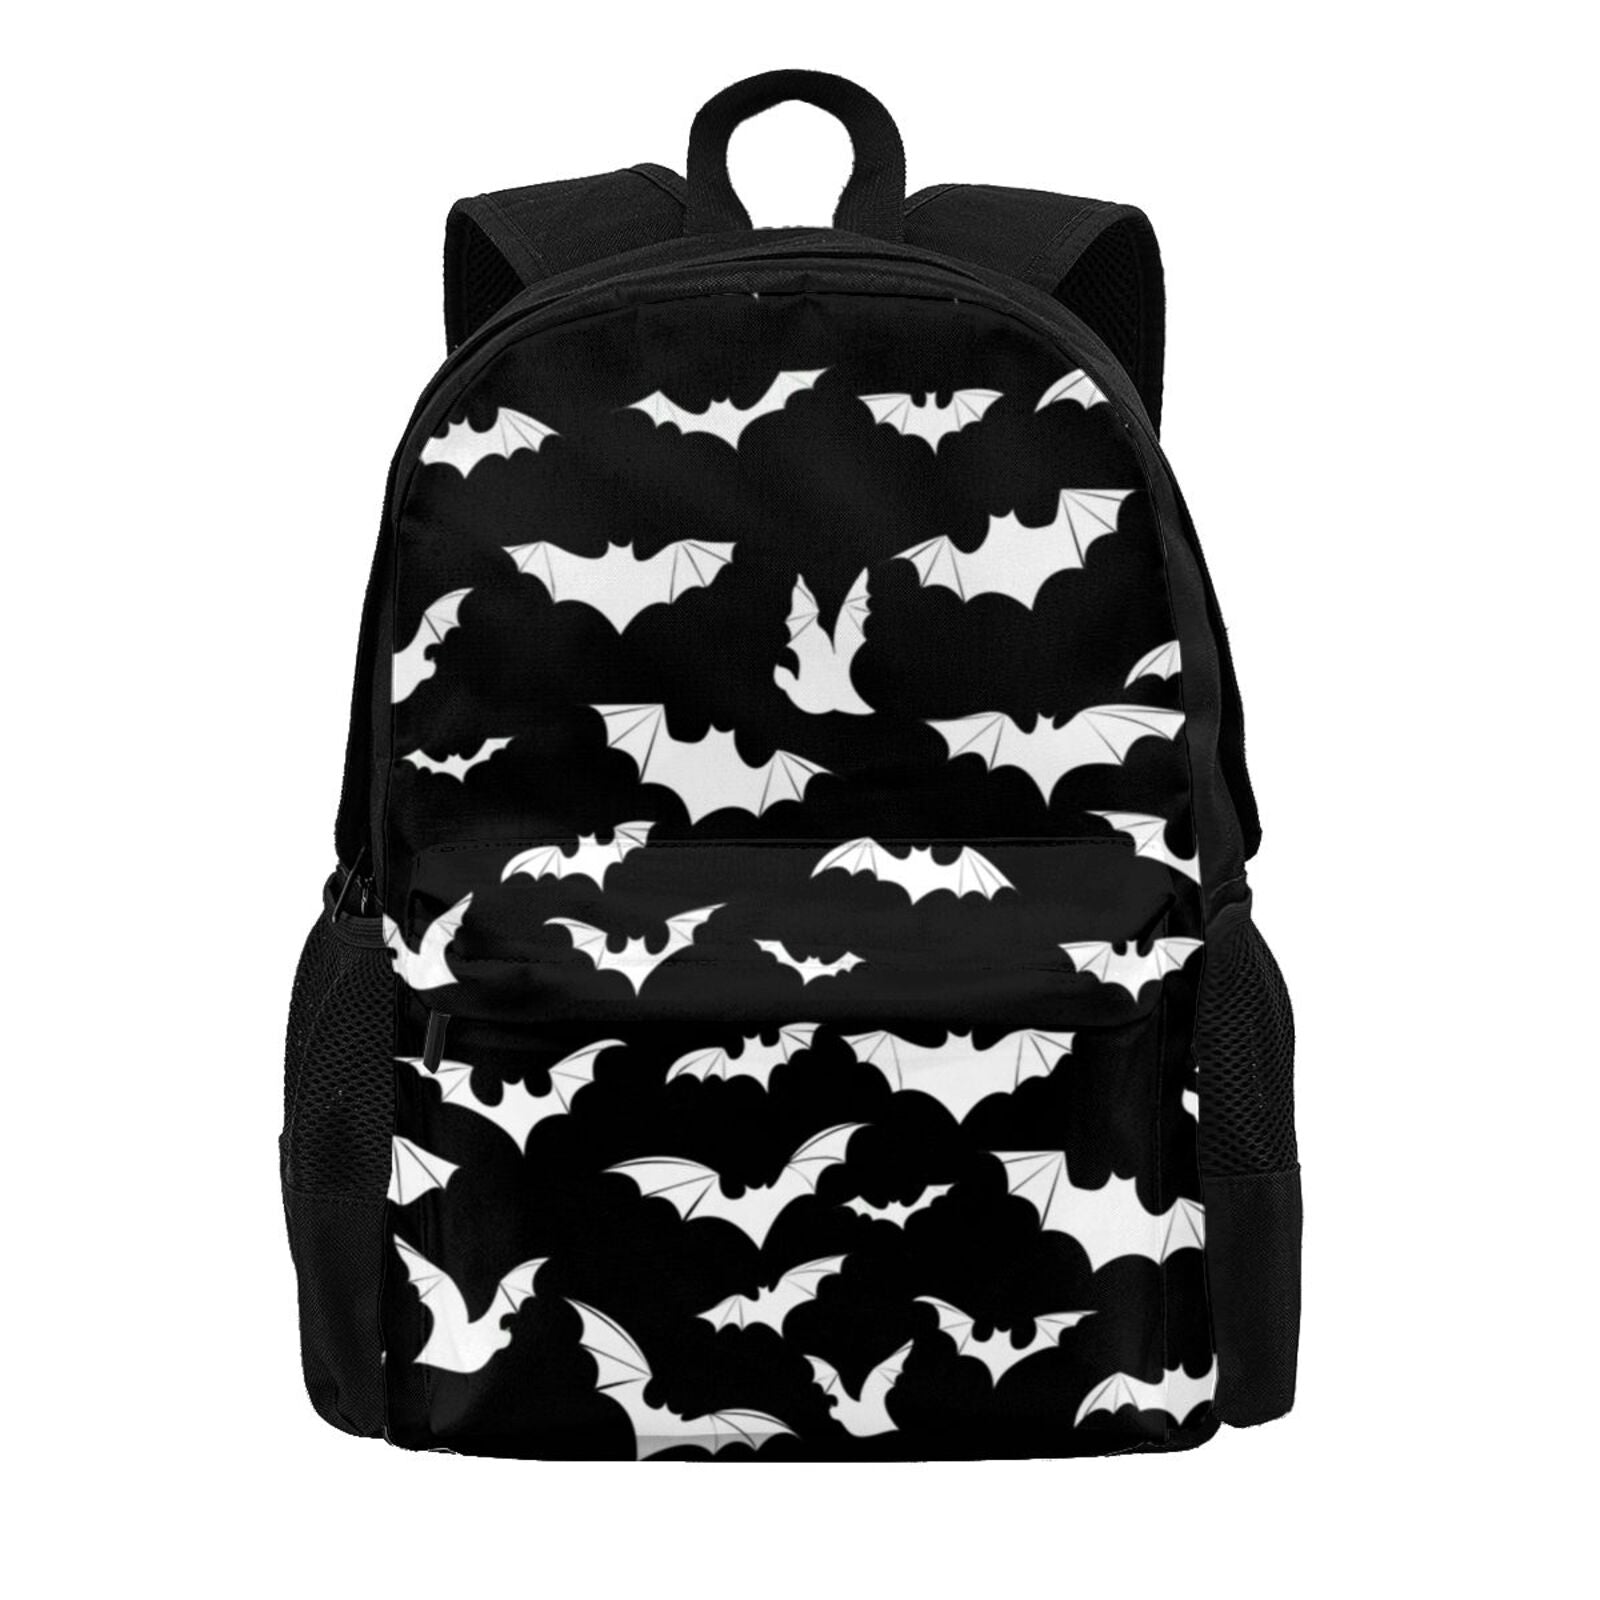 Bats Backpack Bag